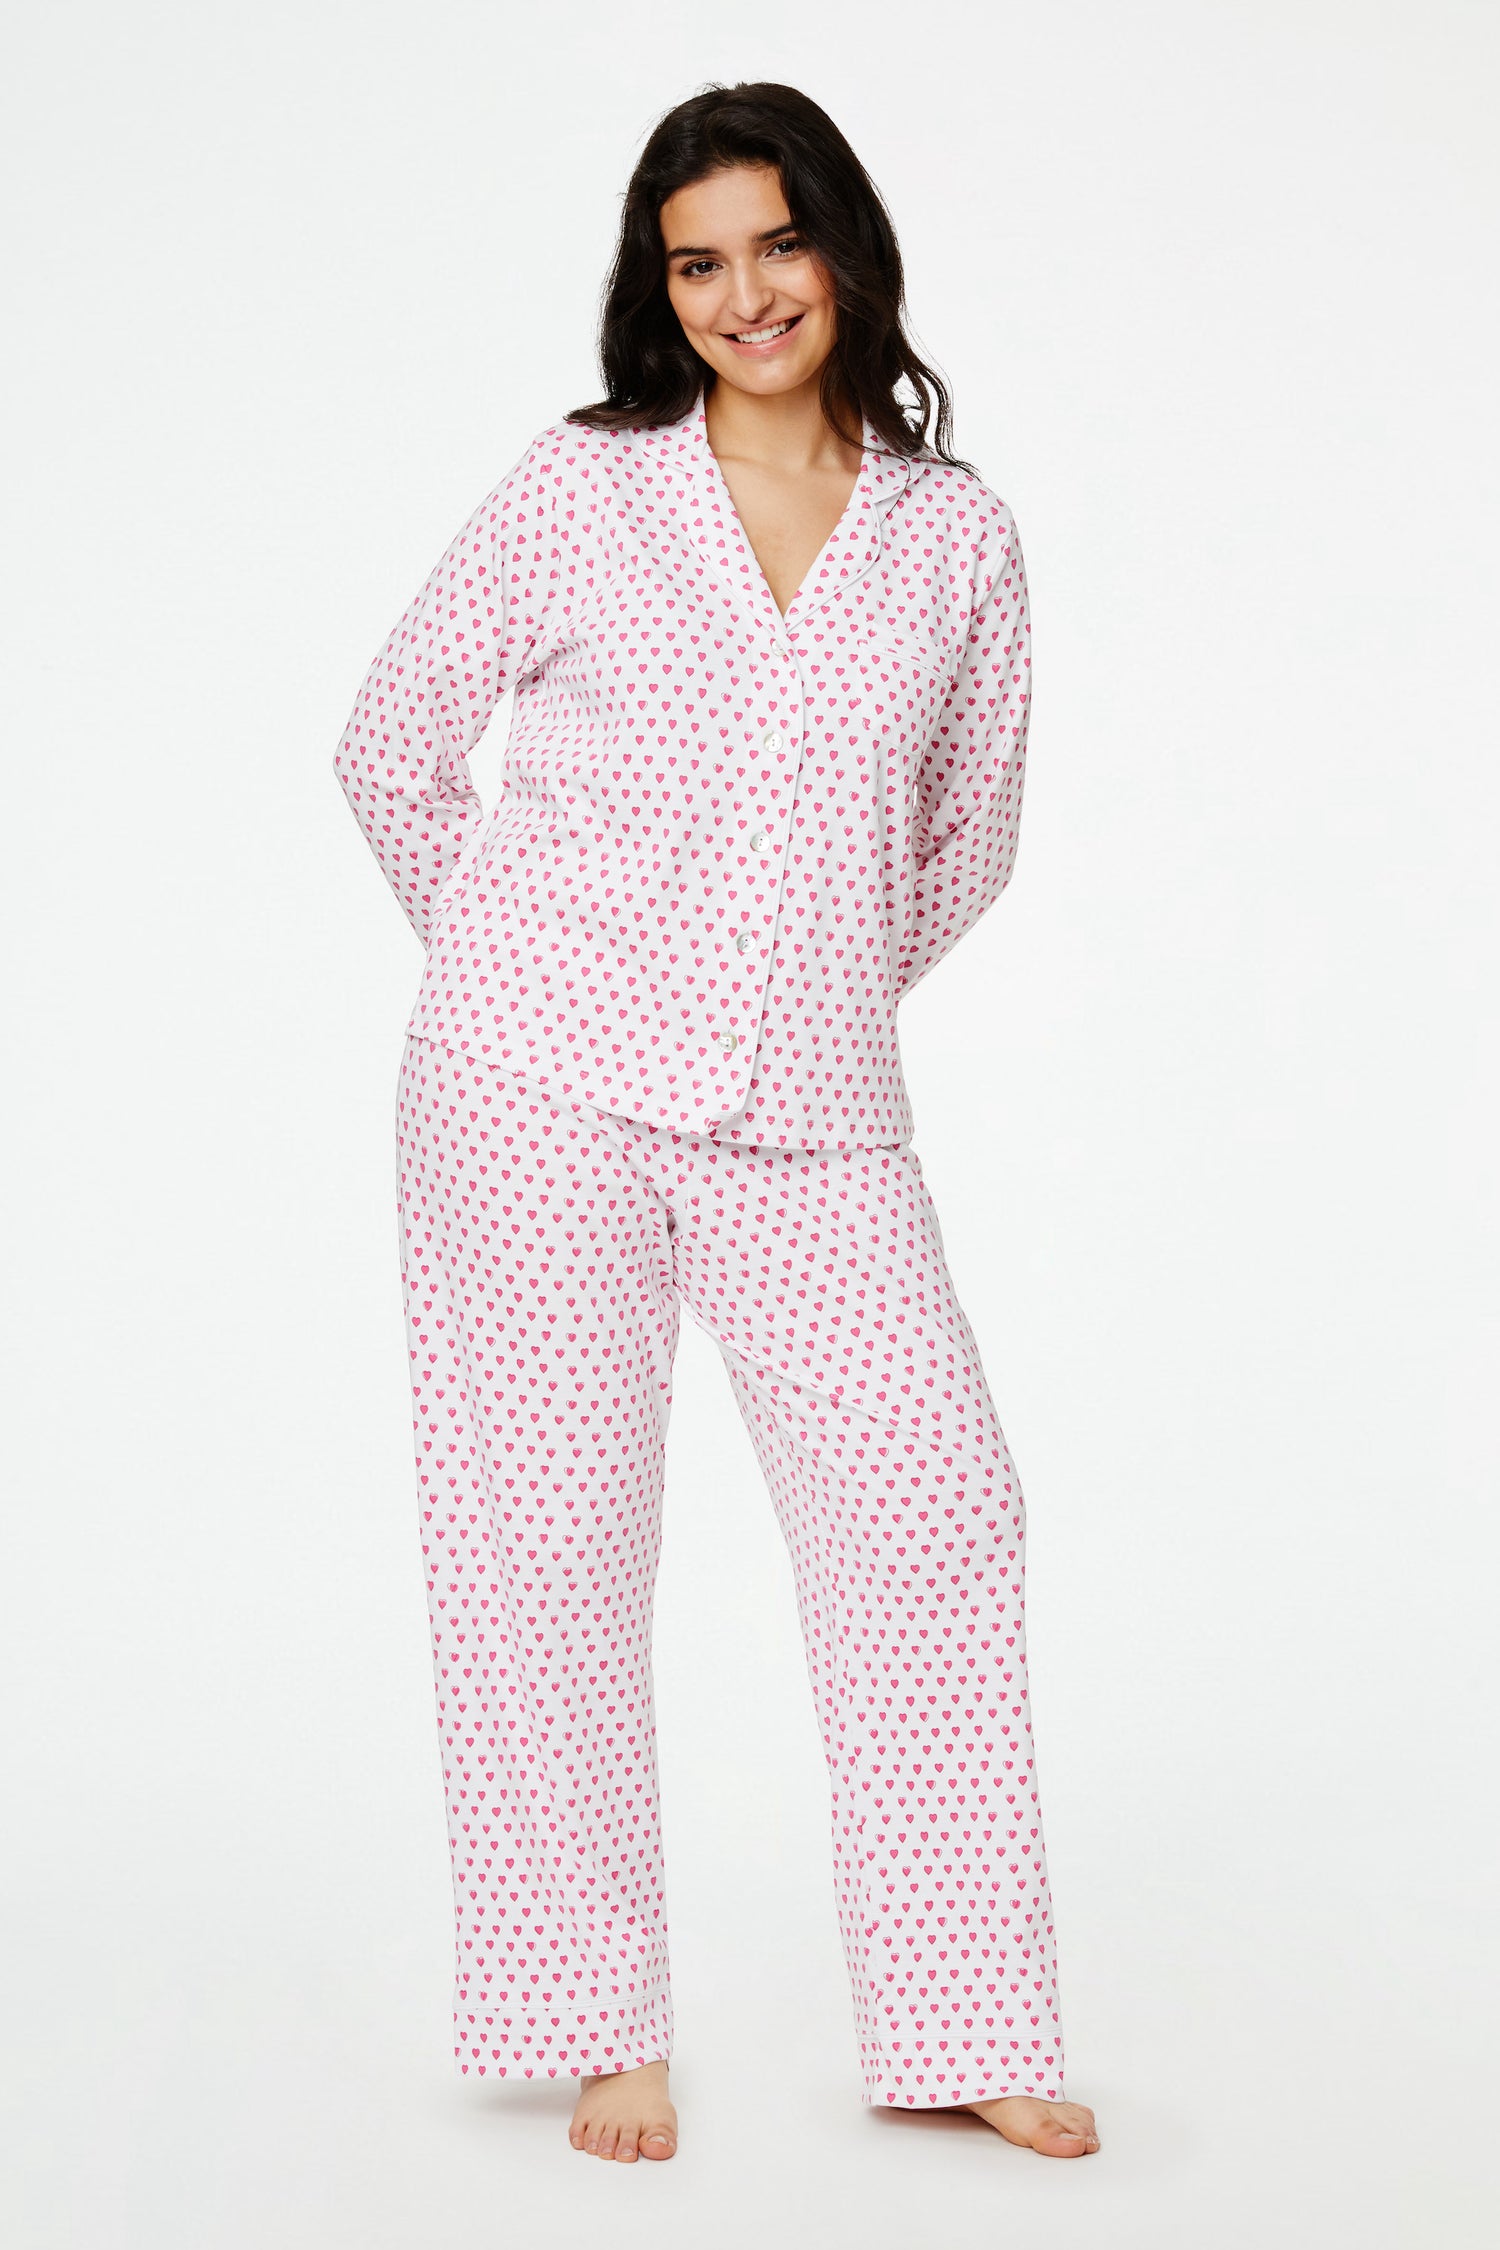  HEARTNICE Womens Pajama Set, Soft Long Sleeve Pajamas